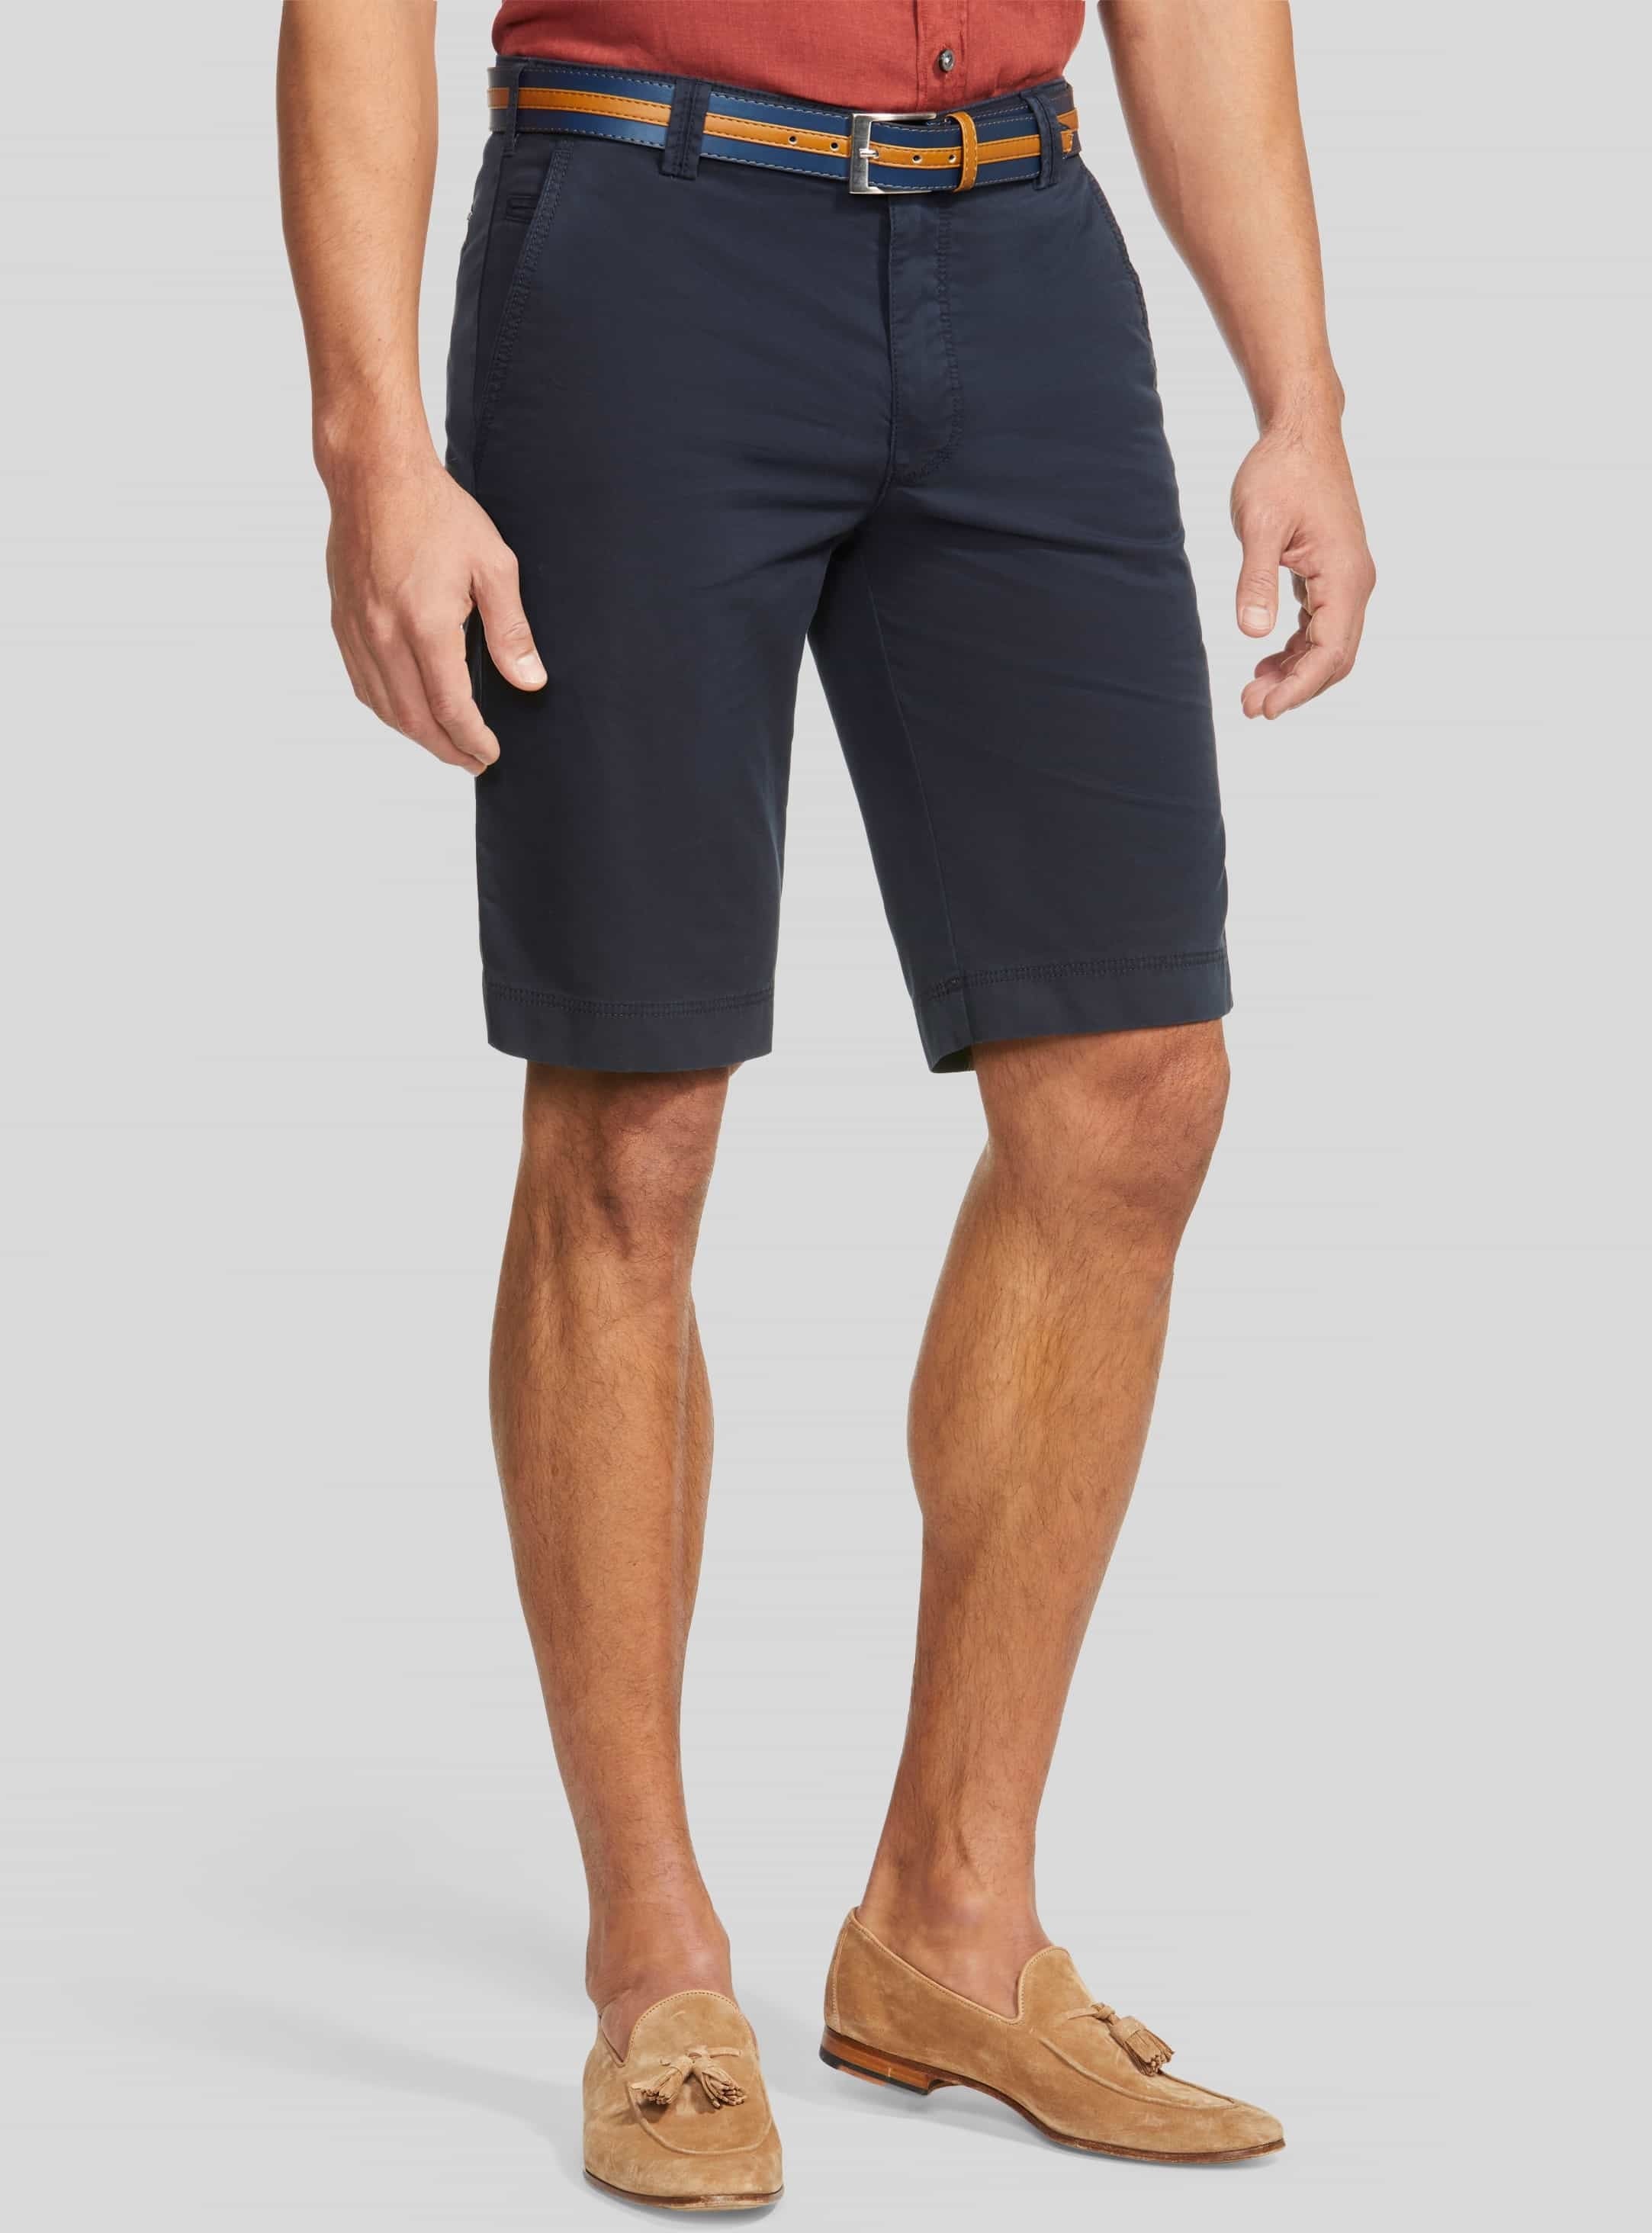 MEYER B-Palma Shorts - Men's Cotton Twill - Navy